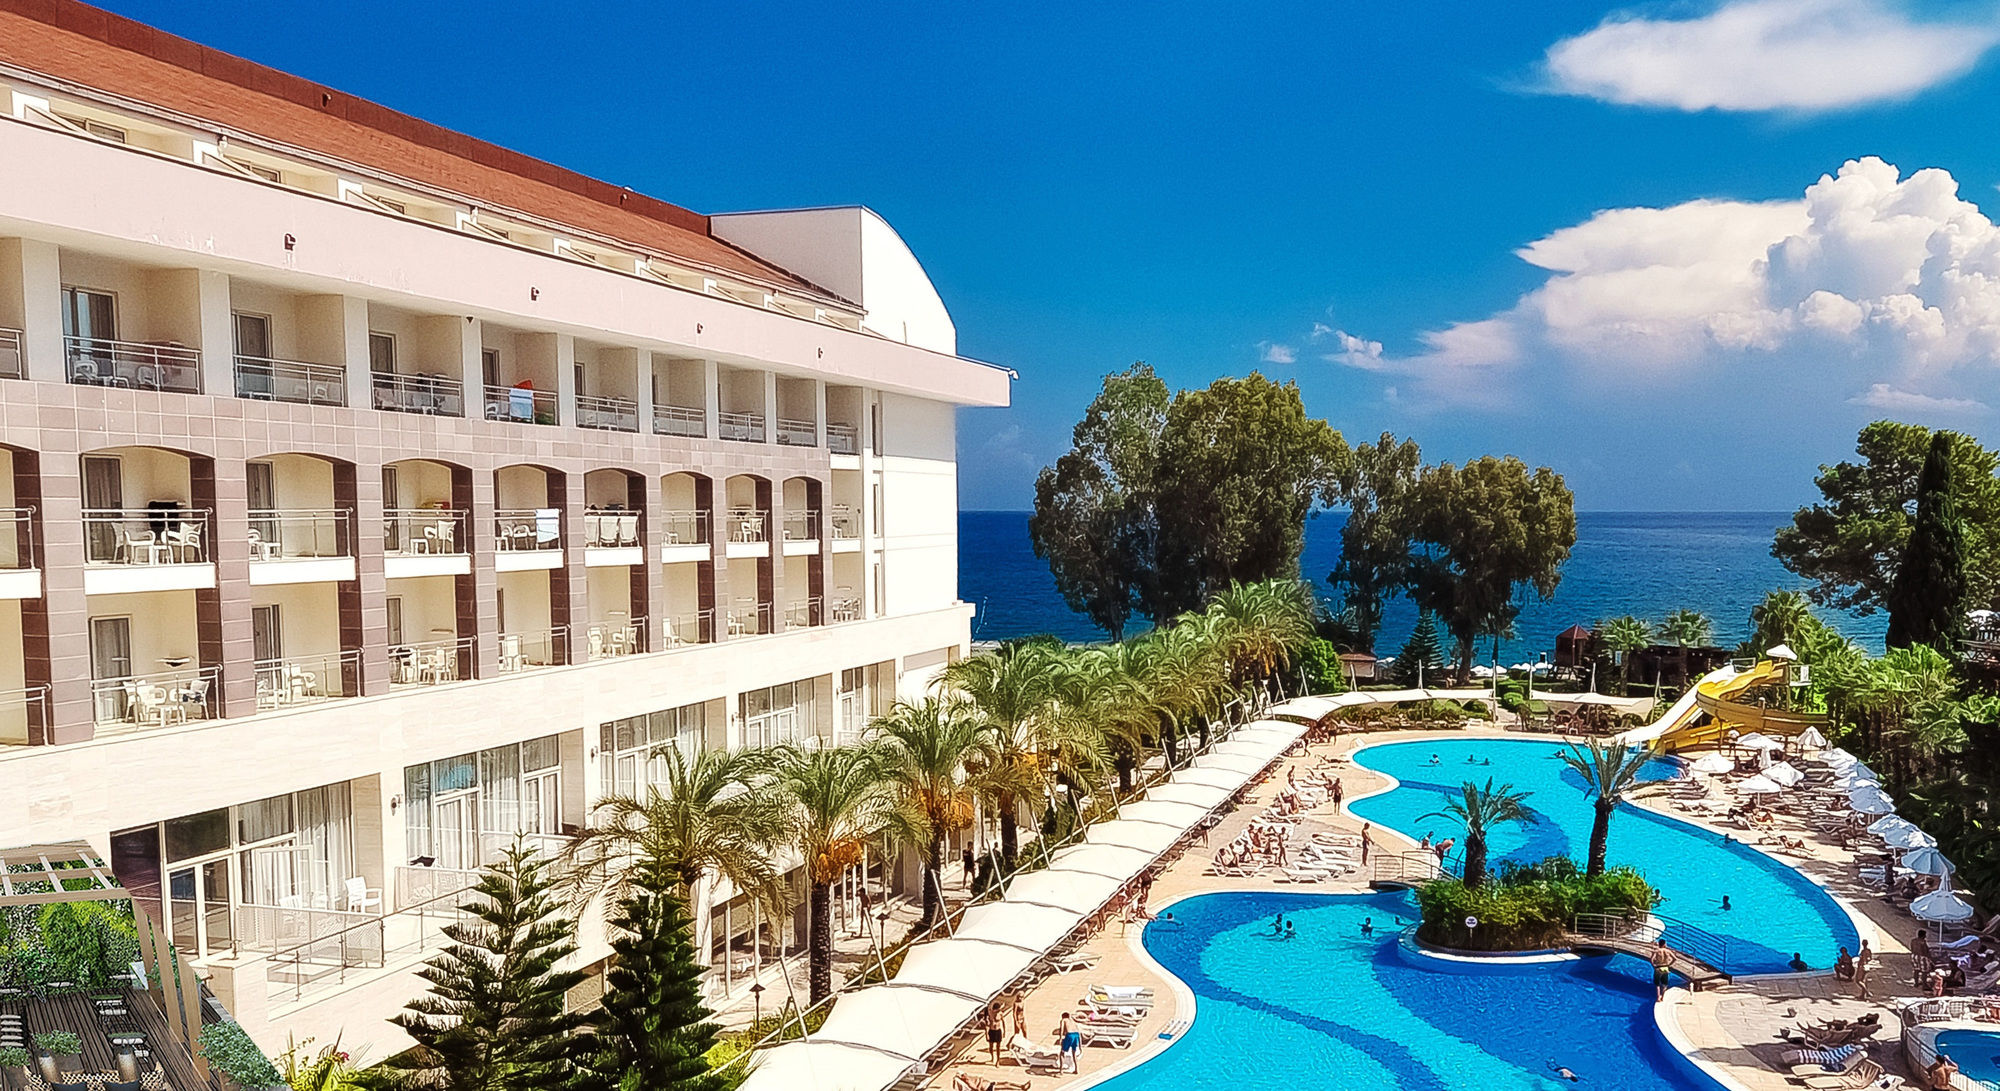 Doubletree by Hilton Antalya-Kemer